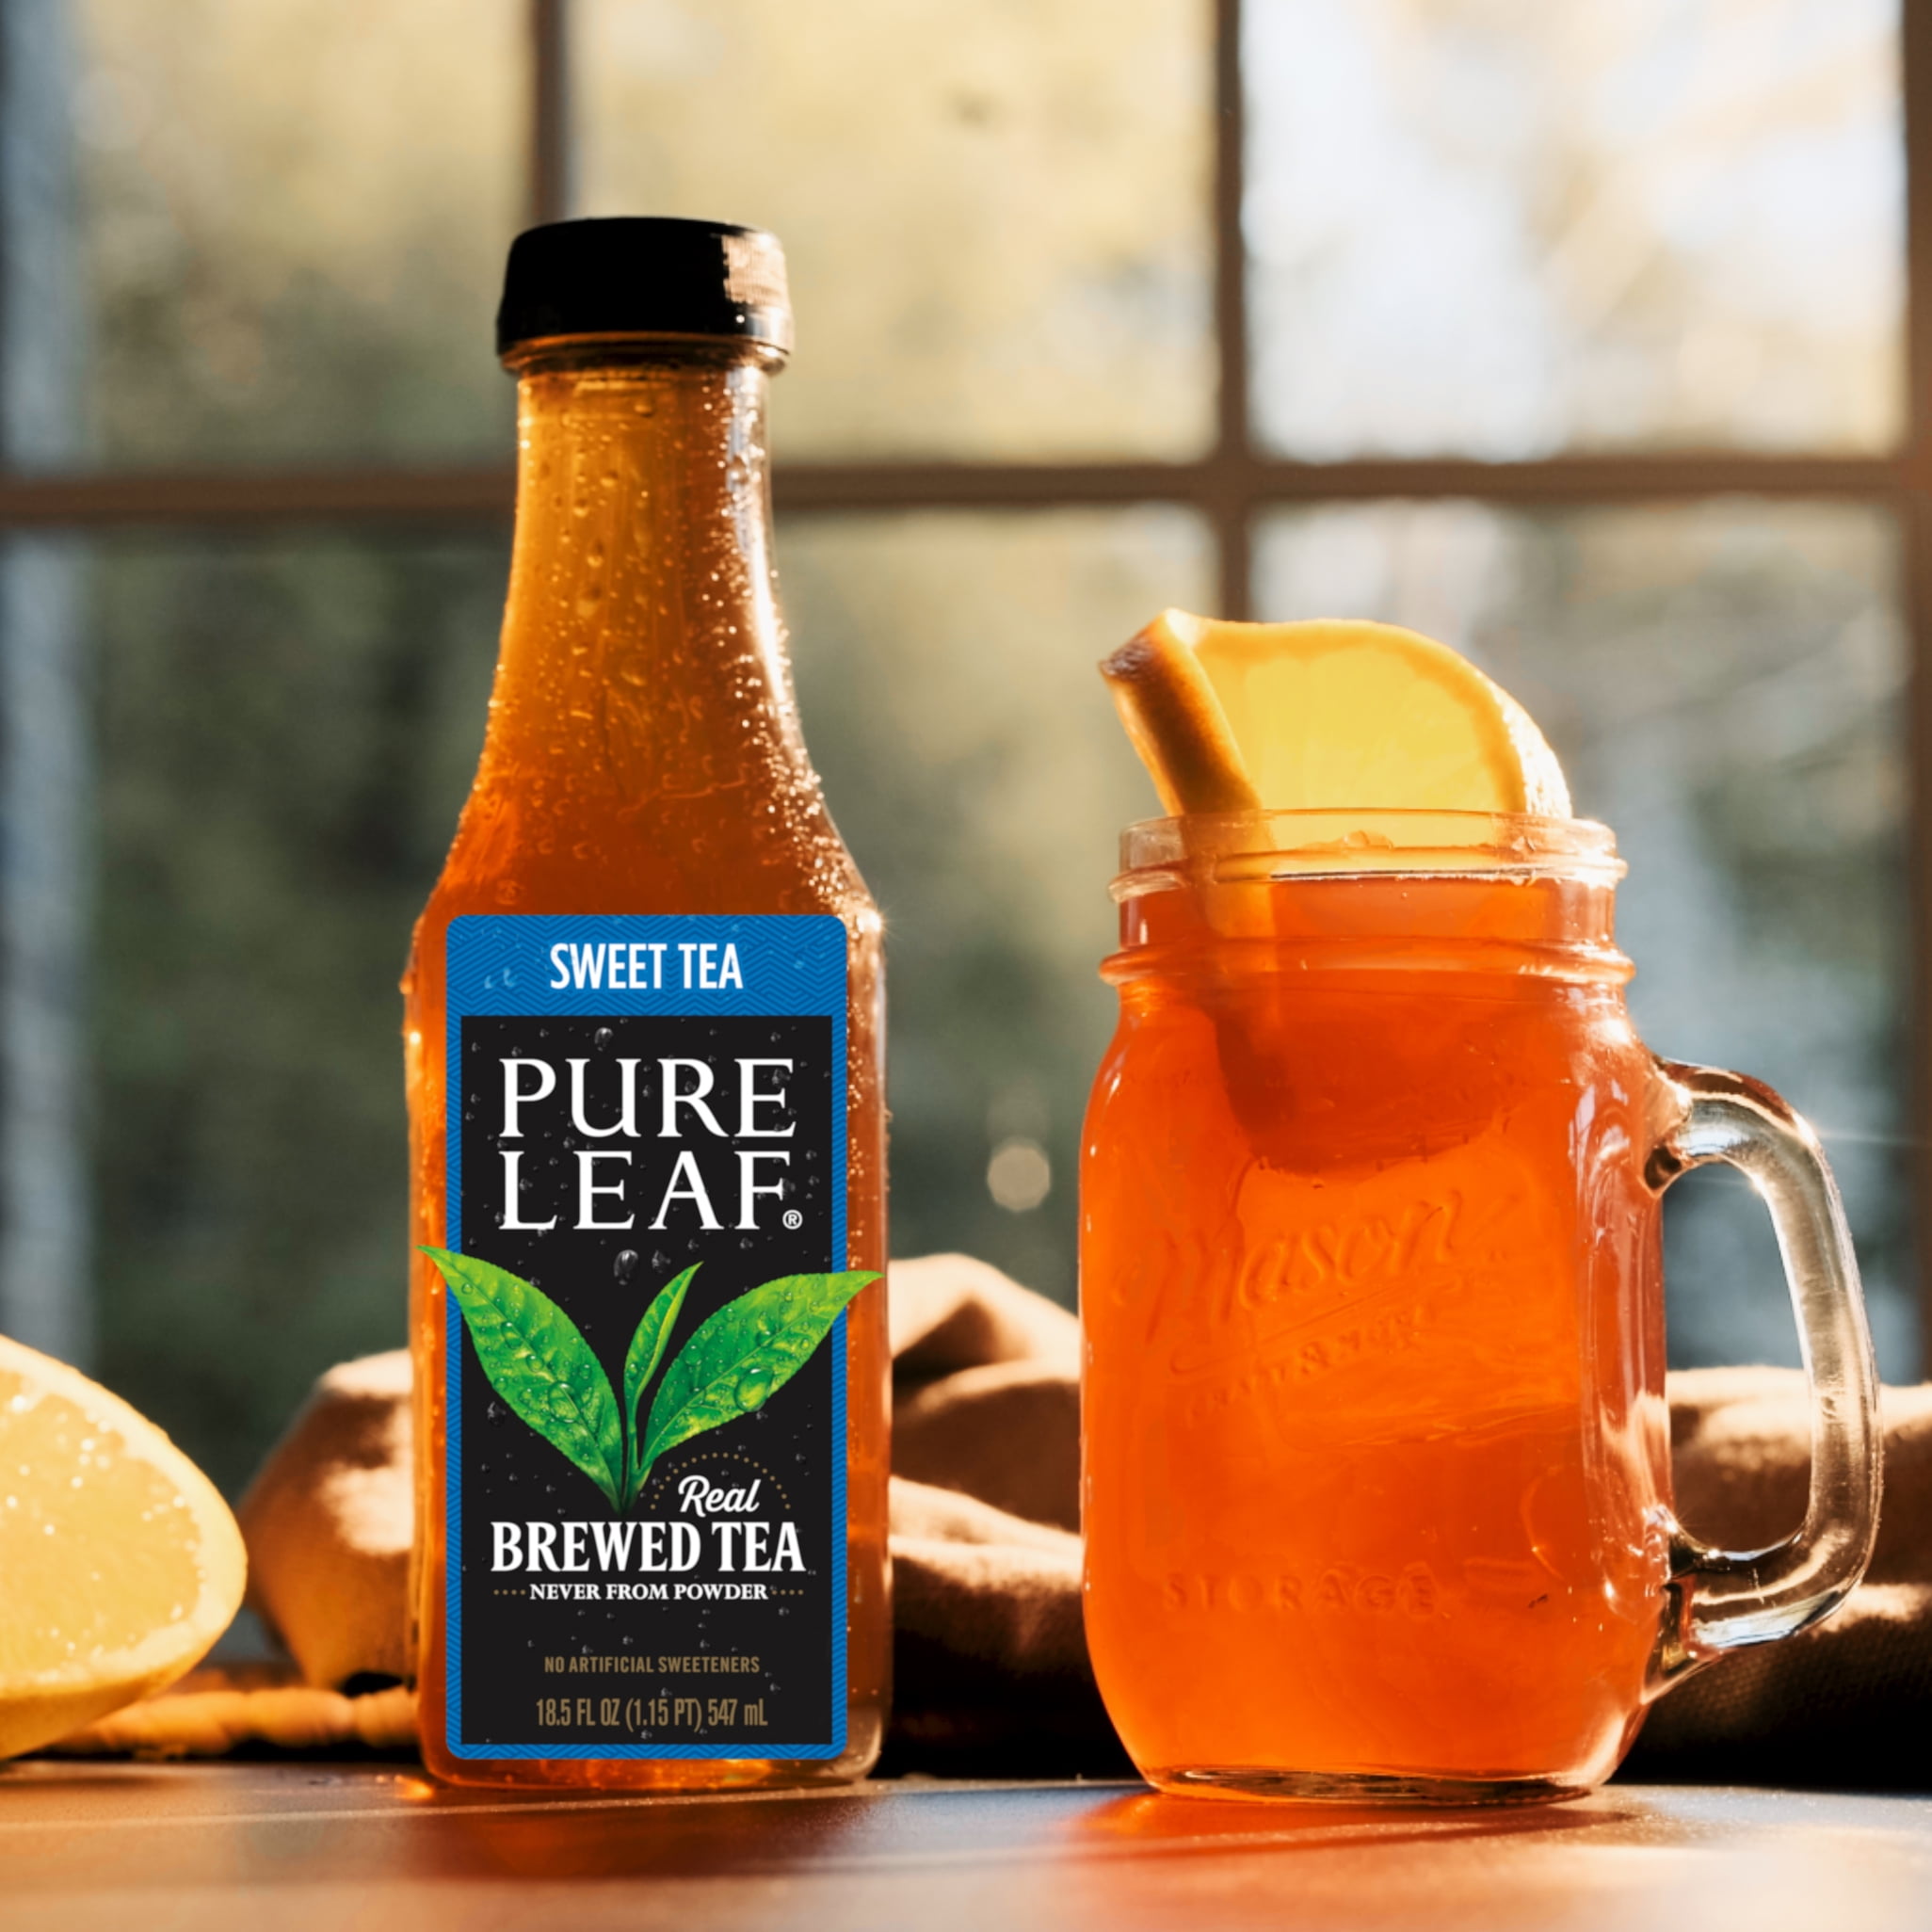 Pure Leaf Lower Sugar Subtly Sweet Tea - 64 fl oz Bottle